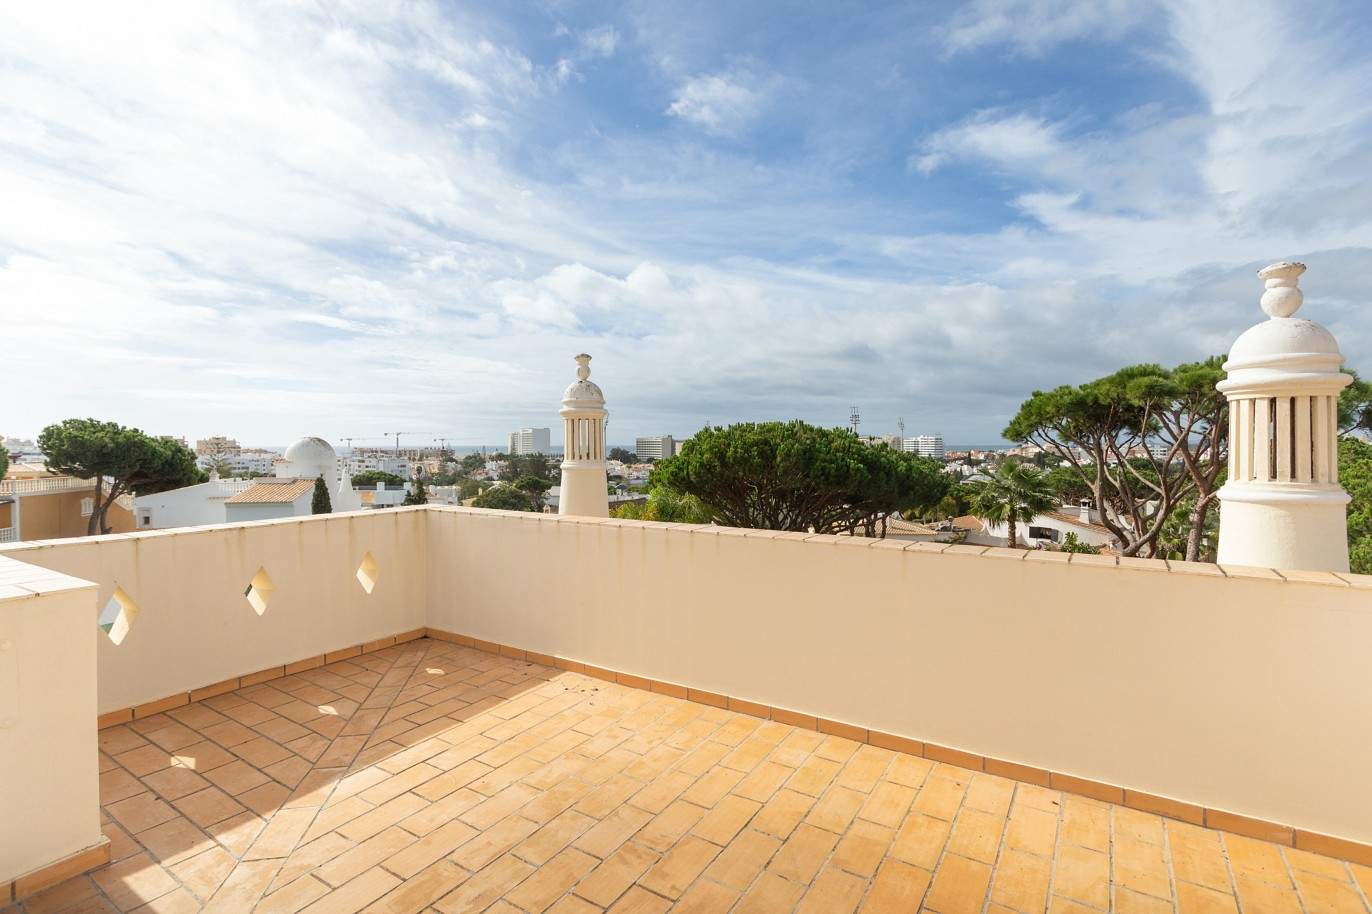 Moradia V5 com piscina, para venda em Vilamoura, Algarve_212561